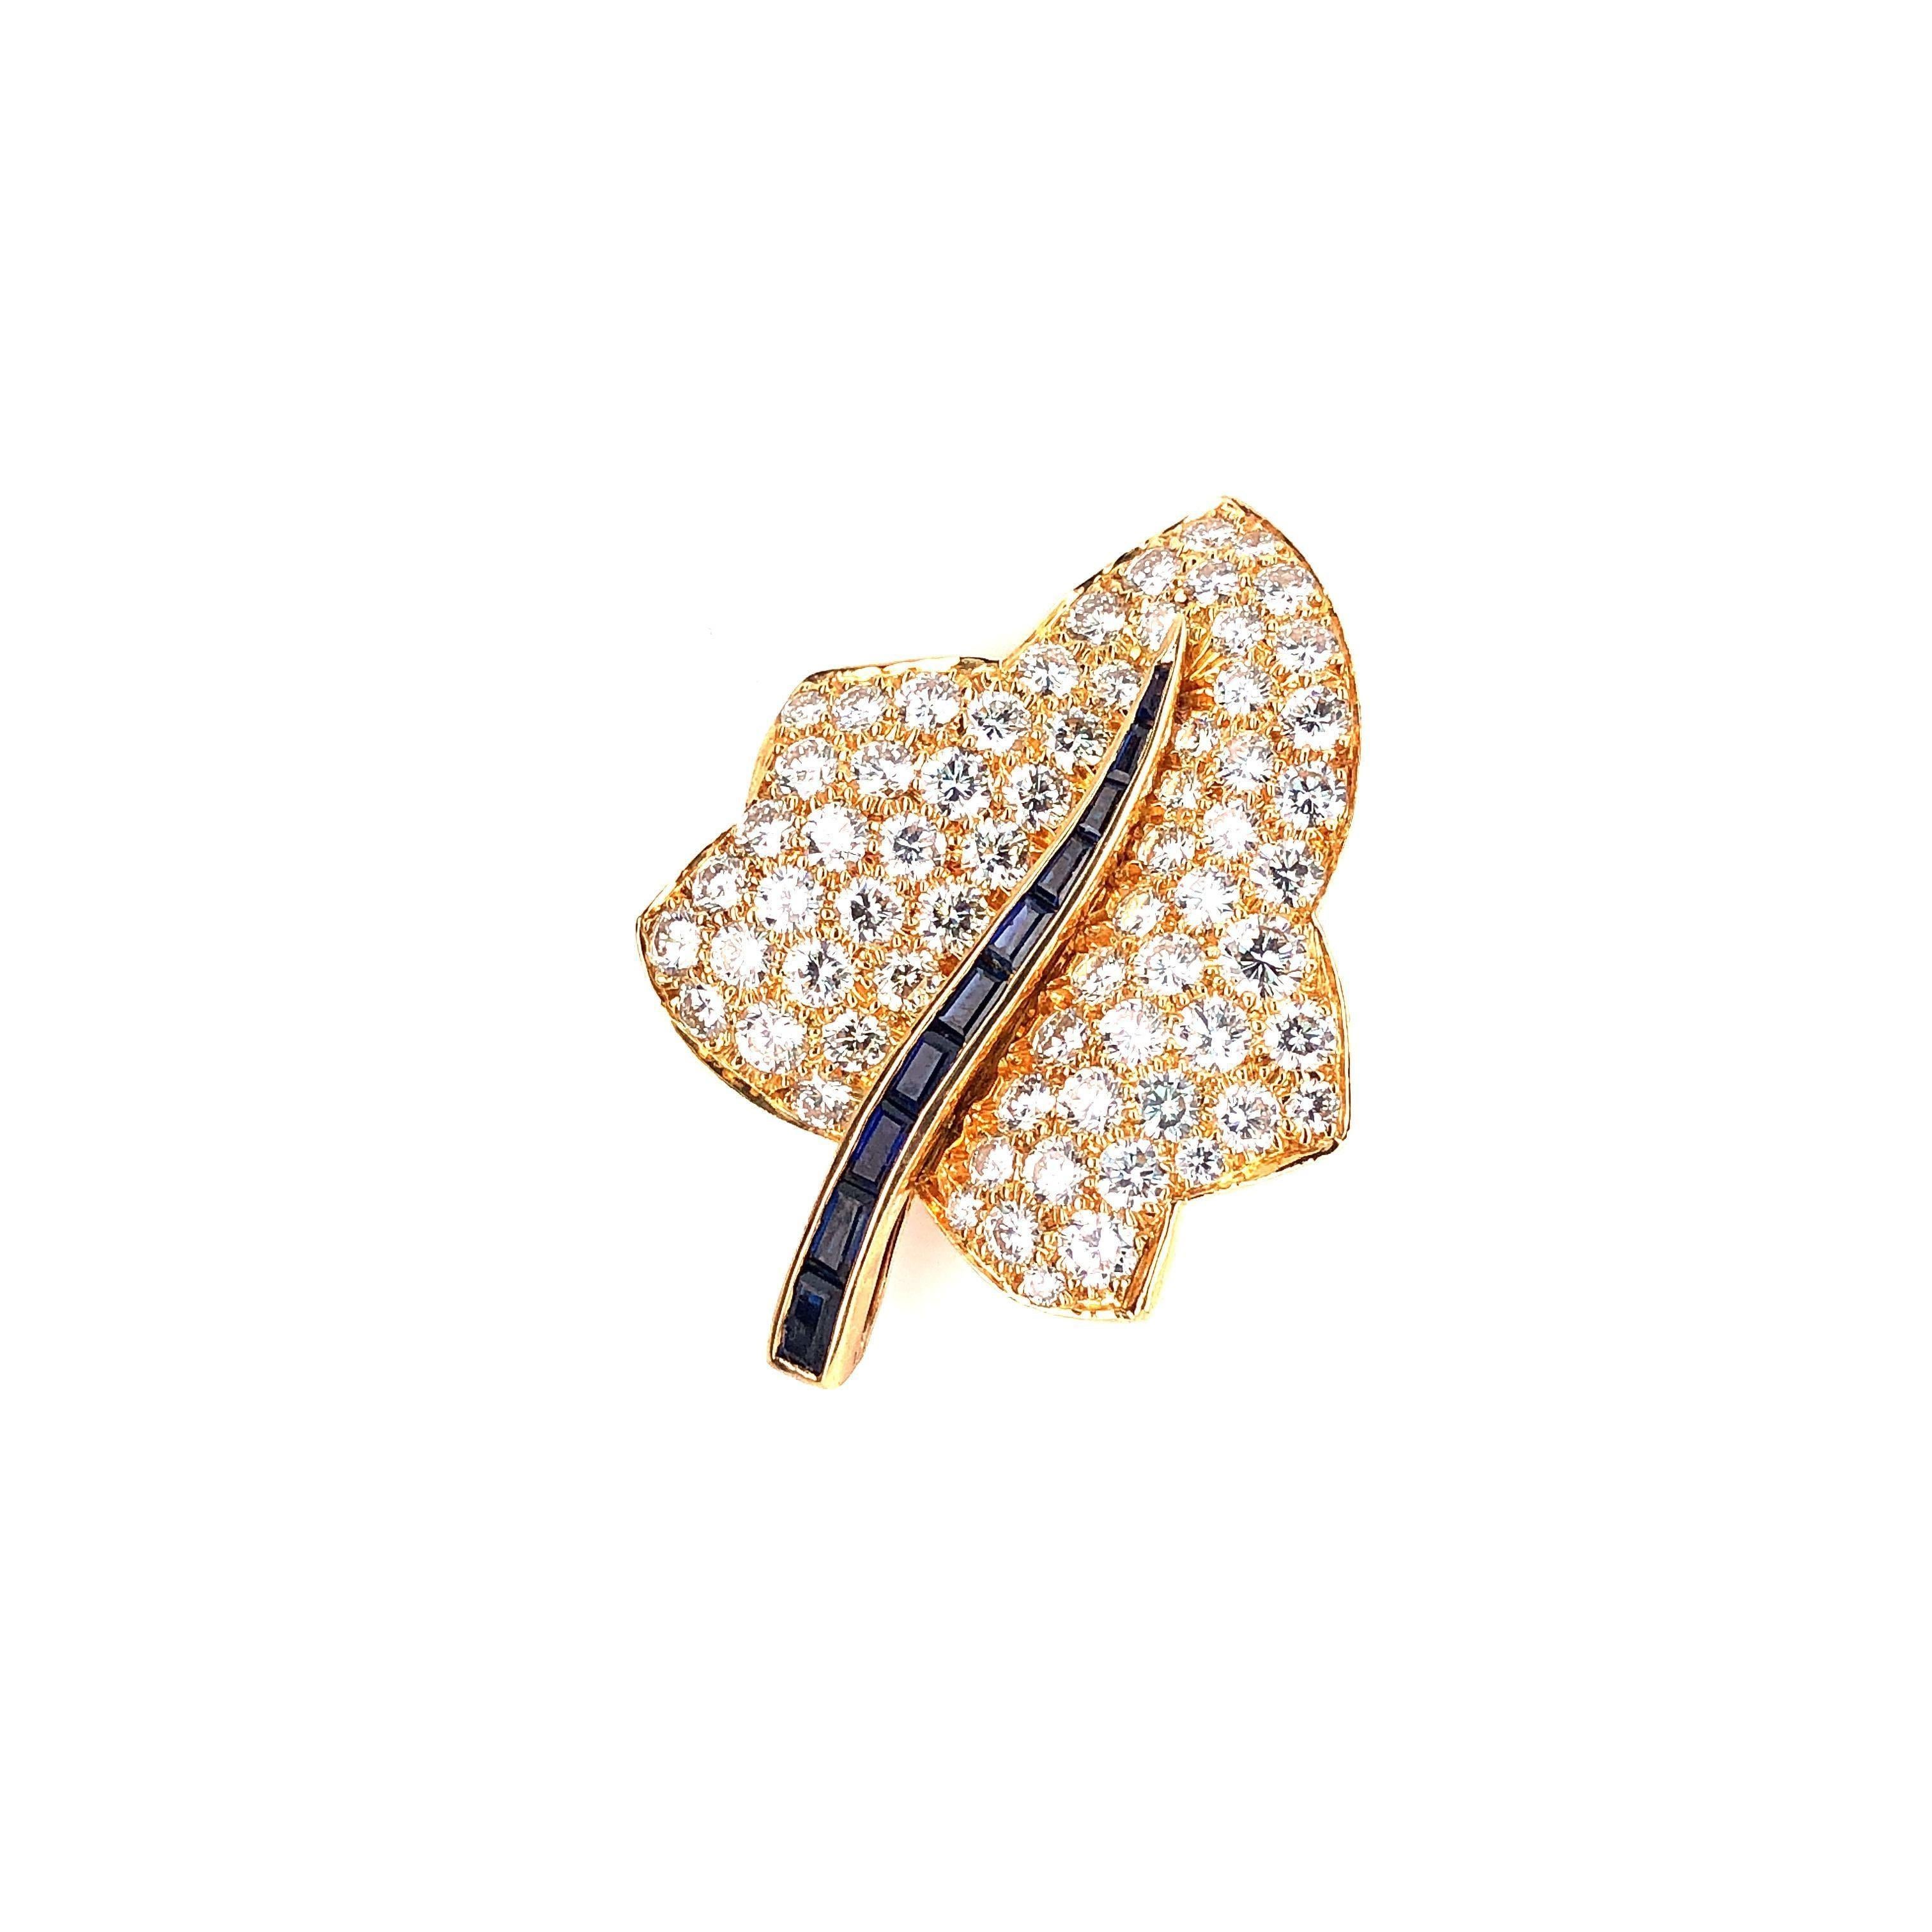 Petite broche Oscar Heyman en forme de feuille d'érable en or pavé de diamants en vente 1